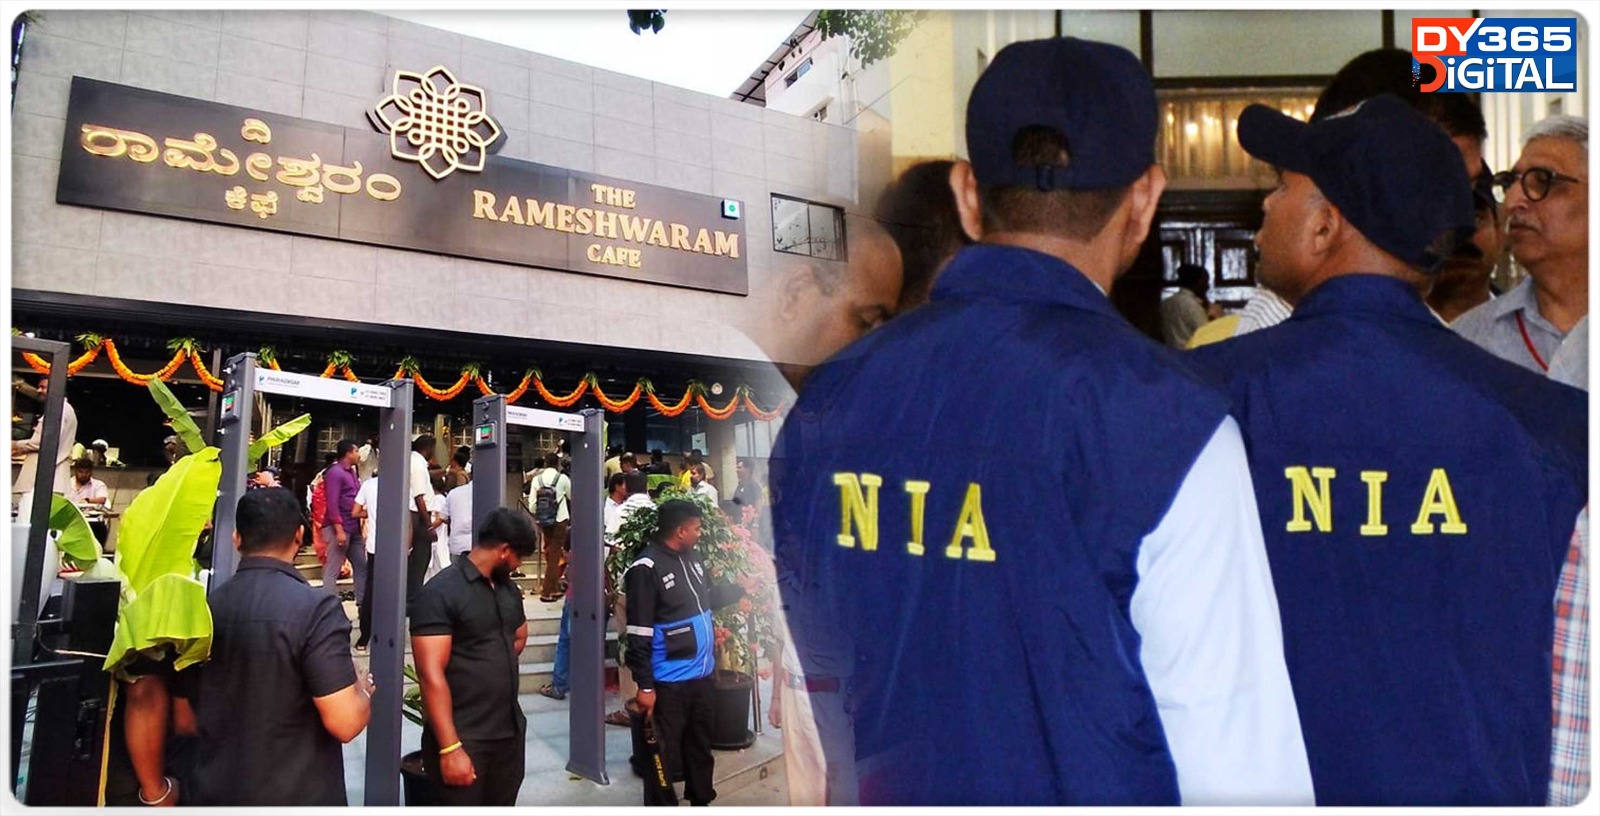 nia-interrogates-bjp-leader-in-connection-with-rameshwaram-cafe-blast-case